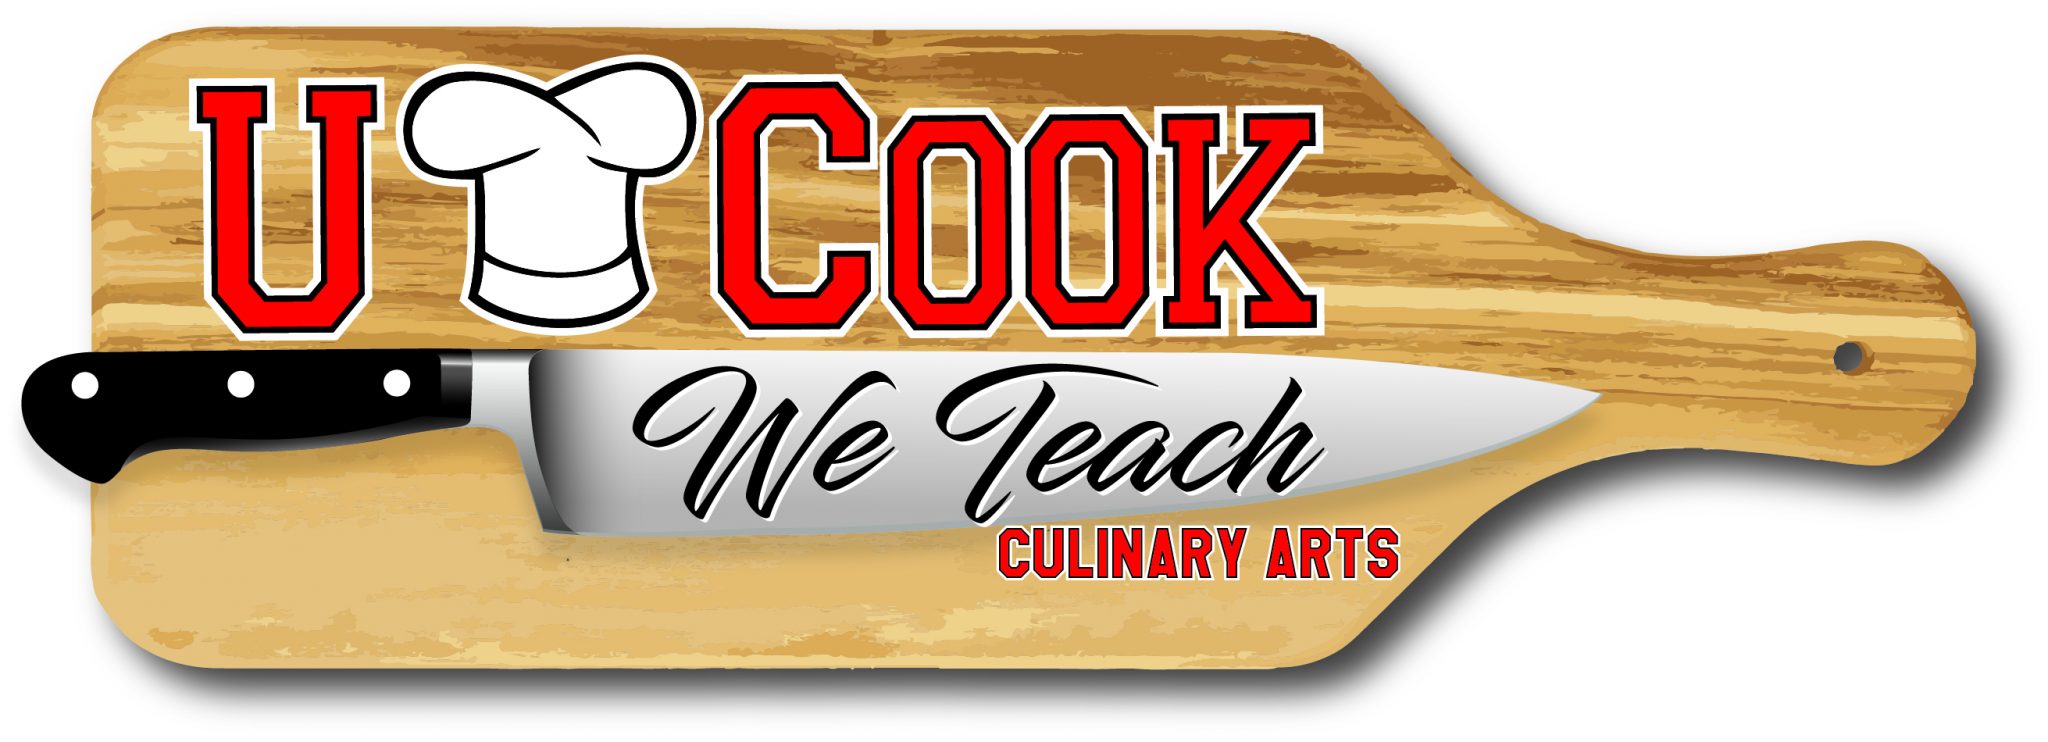 UCook We Teach Culinary Arts (3rd Class)